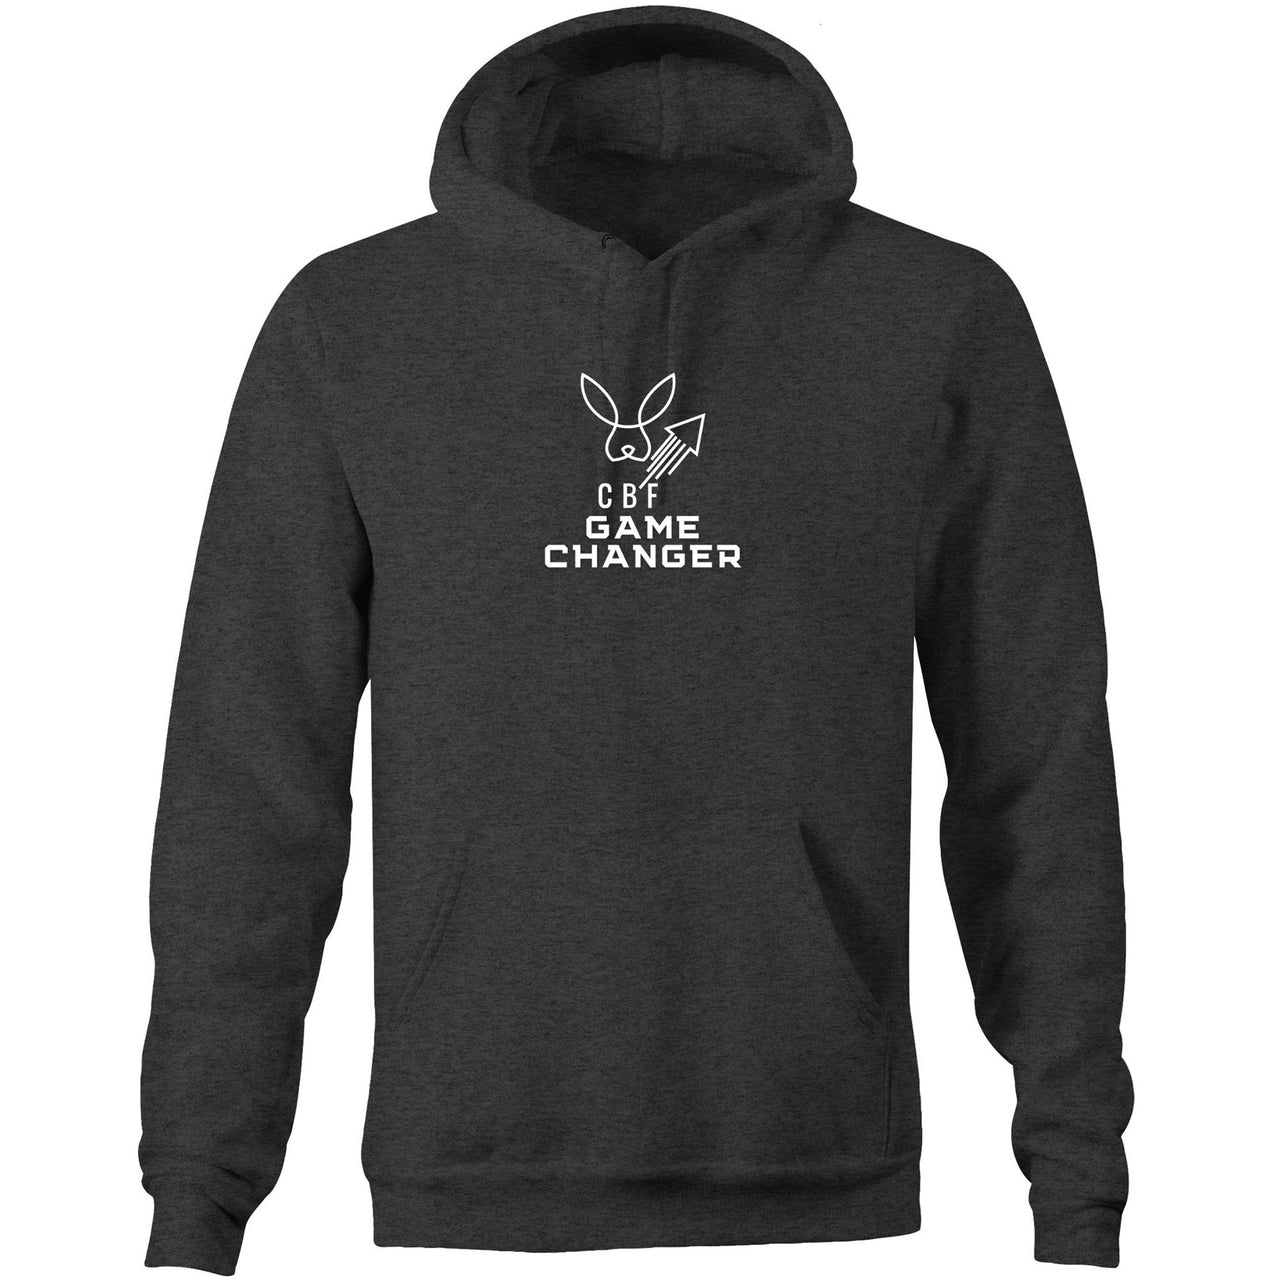 CBF Game Changer Rocket Pocket Hoodie Sweatshirt Charcoal by CBF Clothing